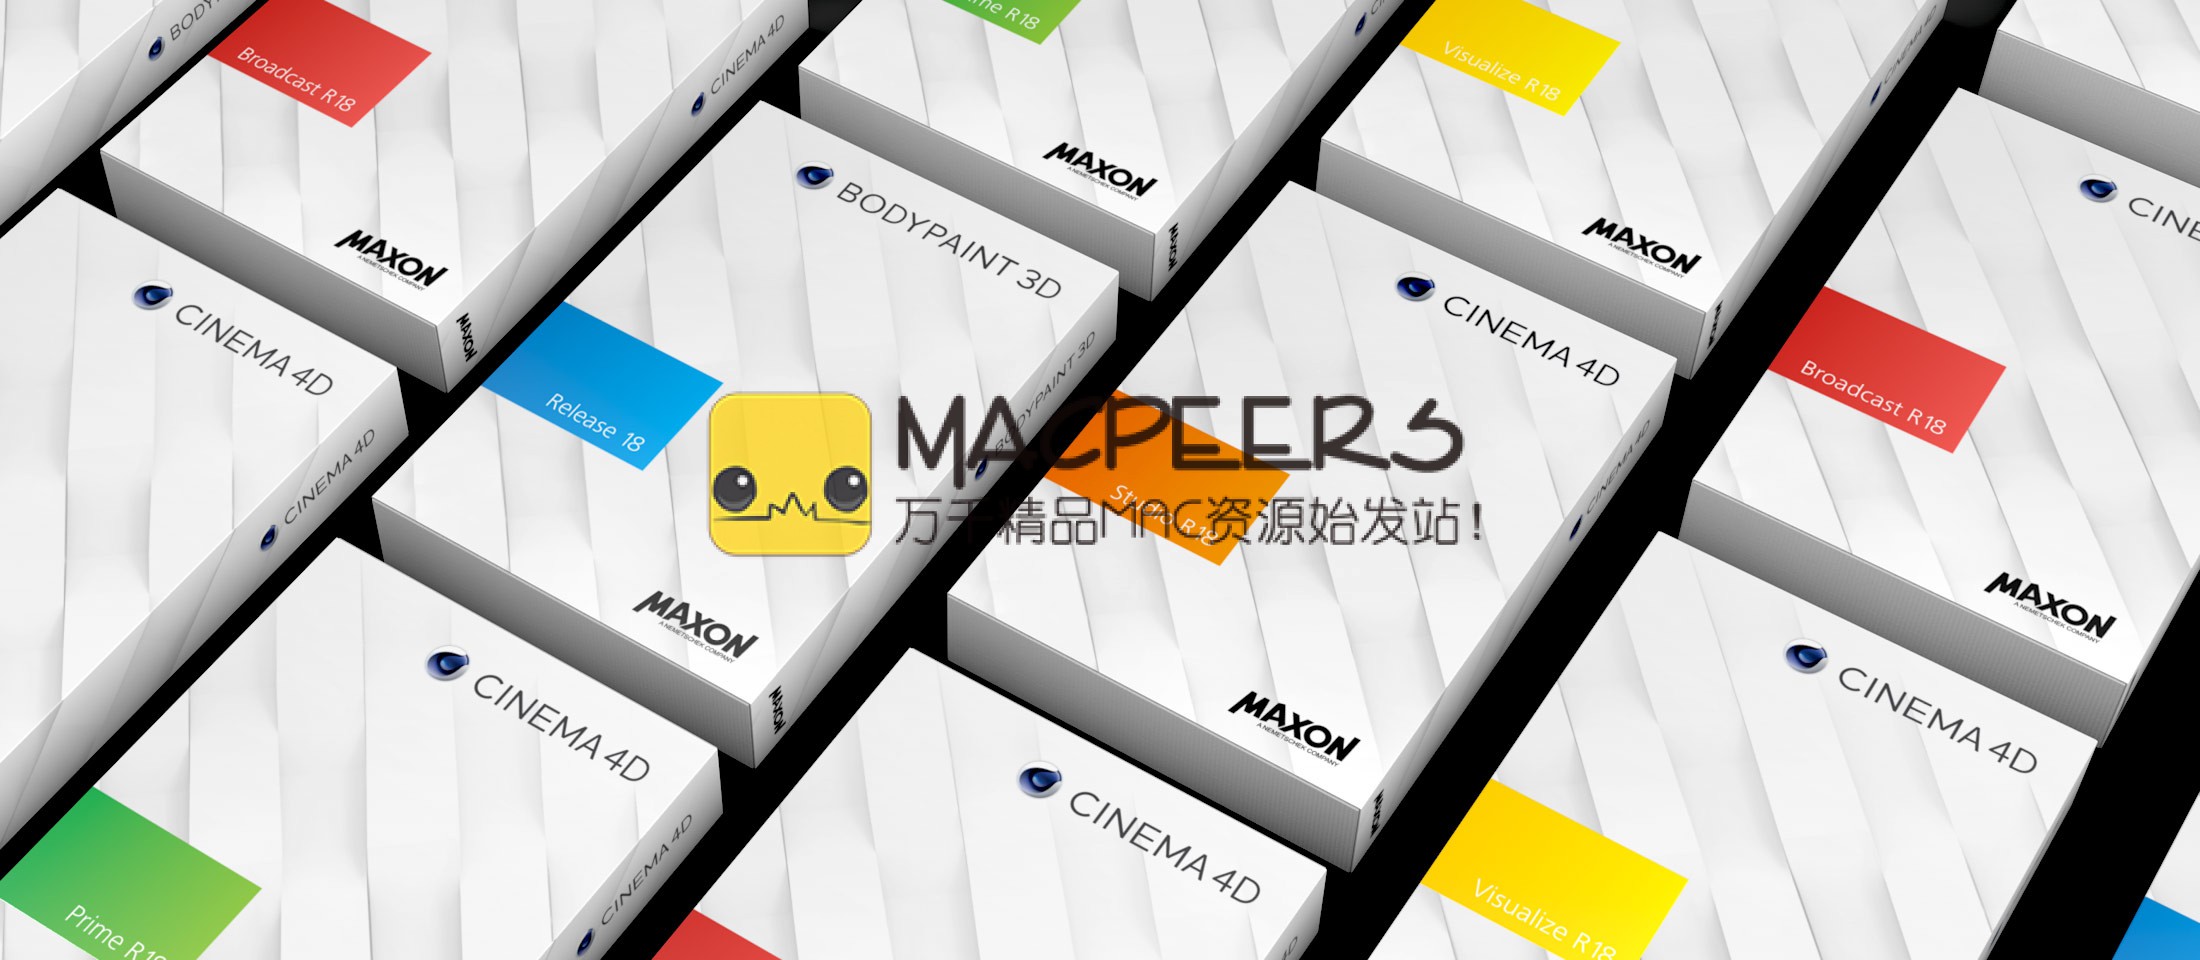 Maxon CINEMA 4D Studio  R18.028  mac/win 完整版 修复 激活